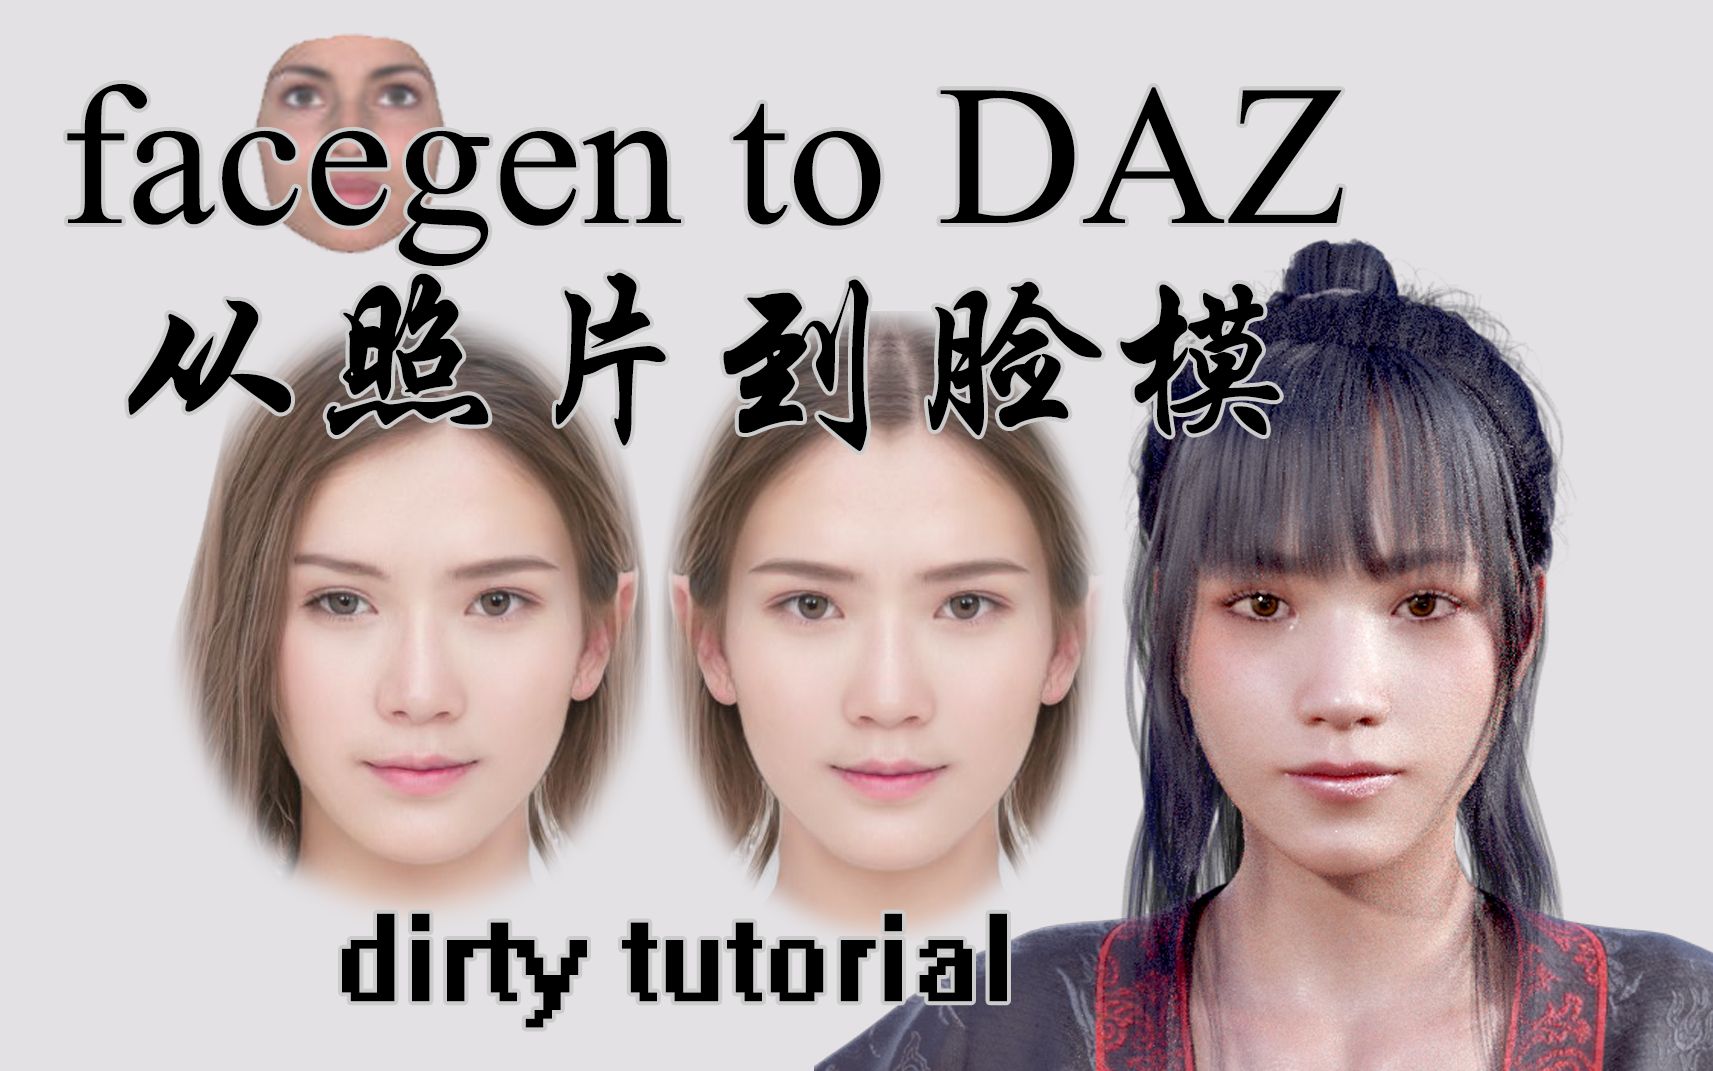 dirty tutorial】从照片到脸模-facegen to DAZ-哔哩哔哩